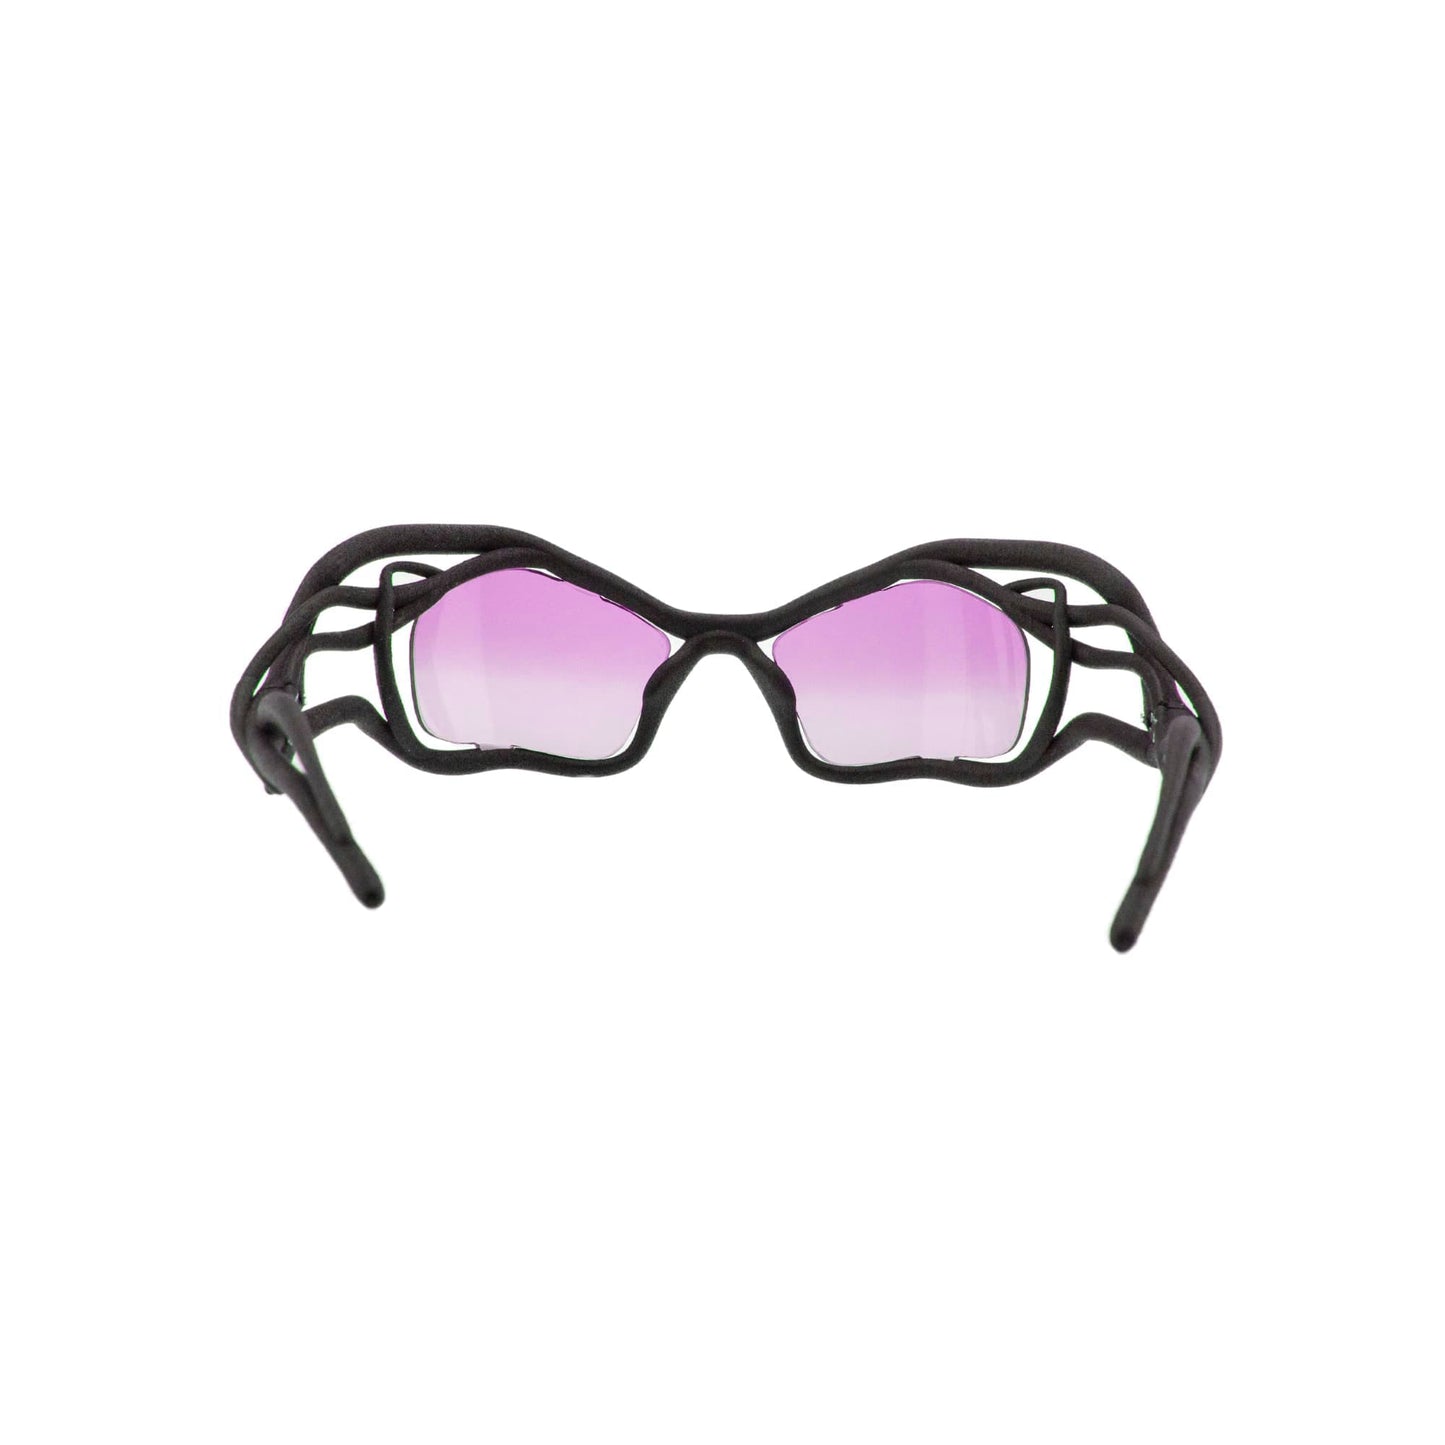 Custom 3D Printed glasses